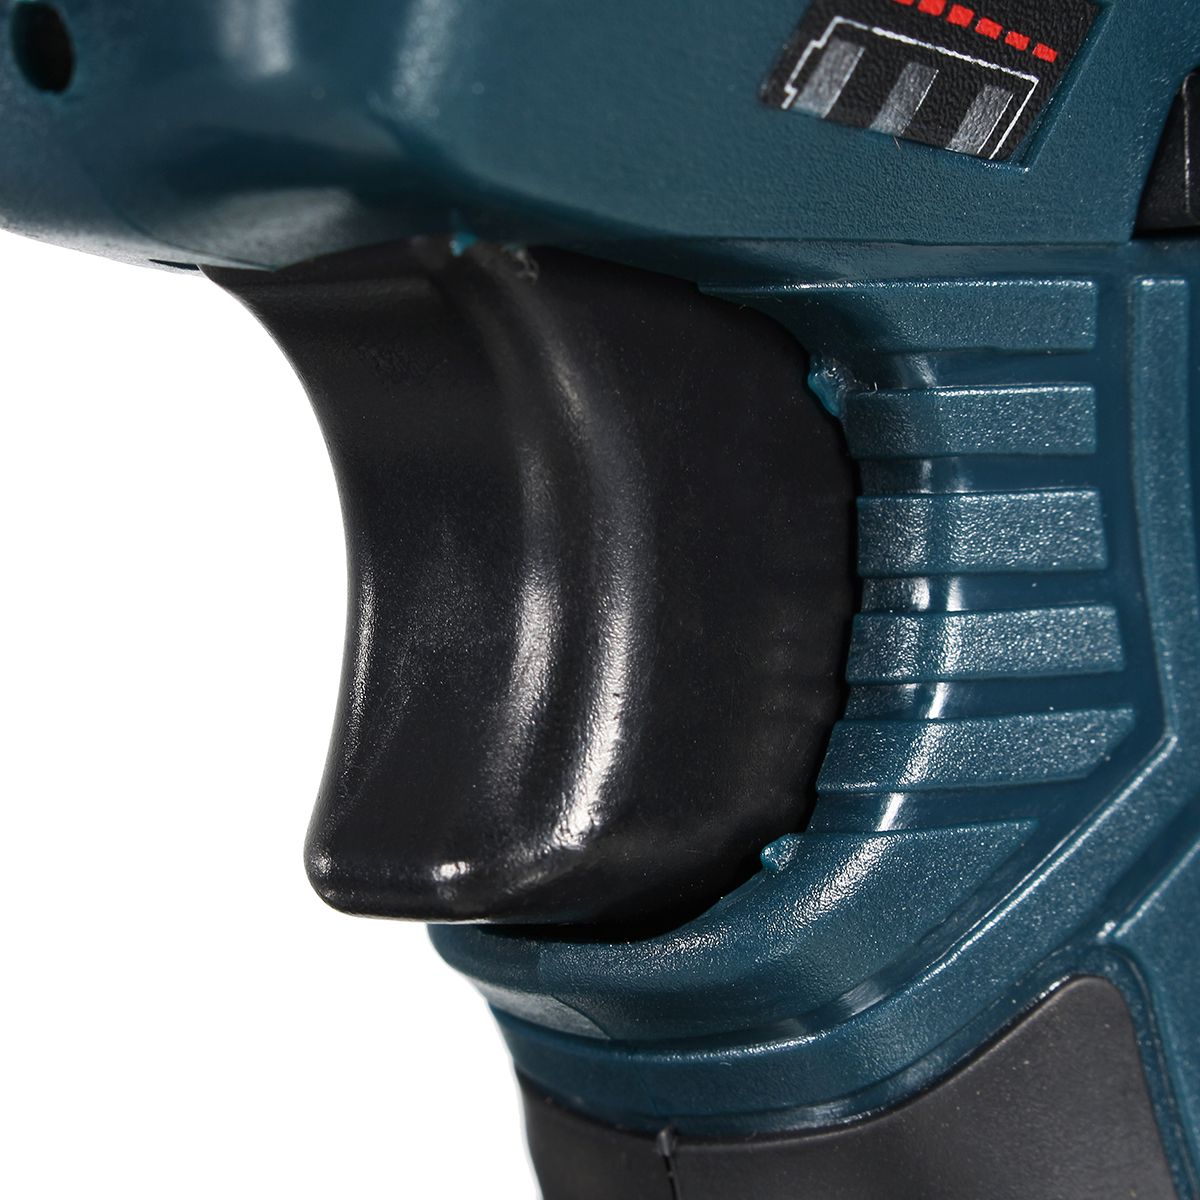 12V-Li-Ion-Cordless-Electric-Hammer-Drill-Driver-Hand-Kit-1-Speed-LED-Light-1220453